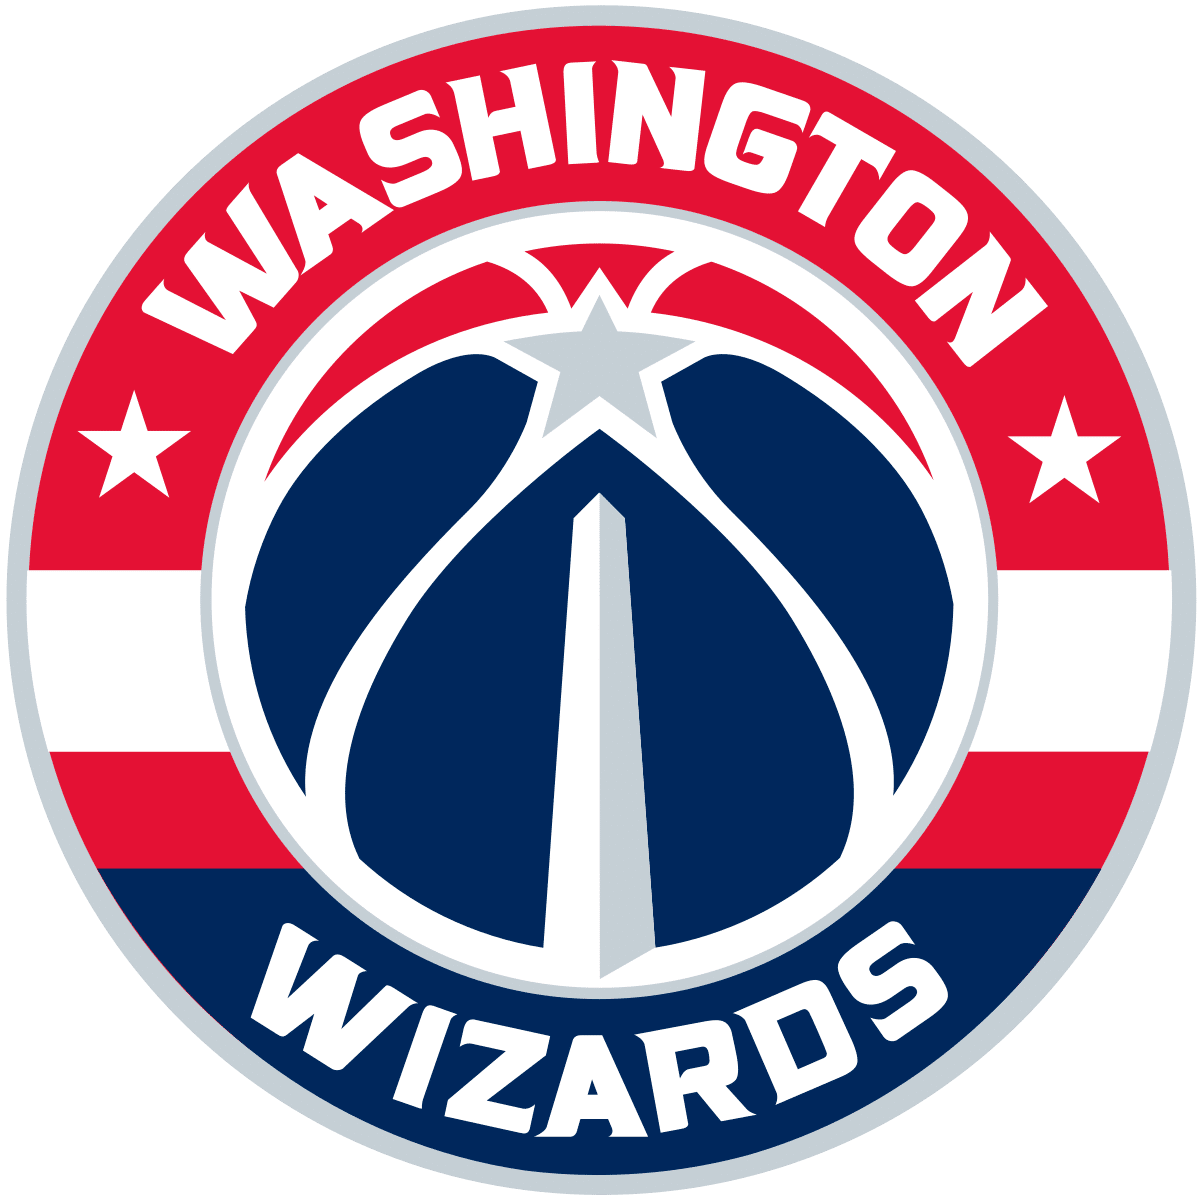 Washington Wizards 2022 Summer League Roster